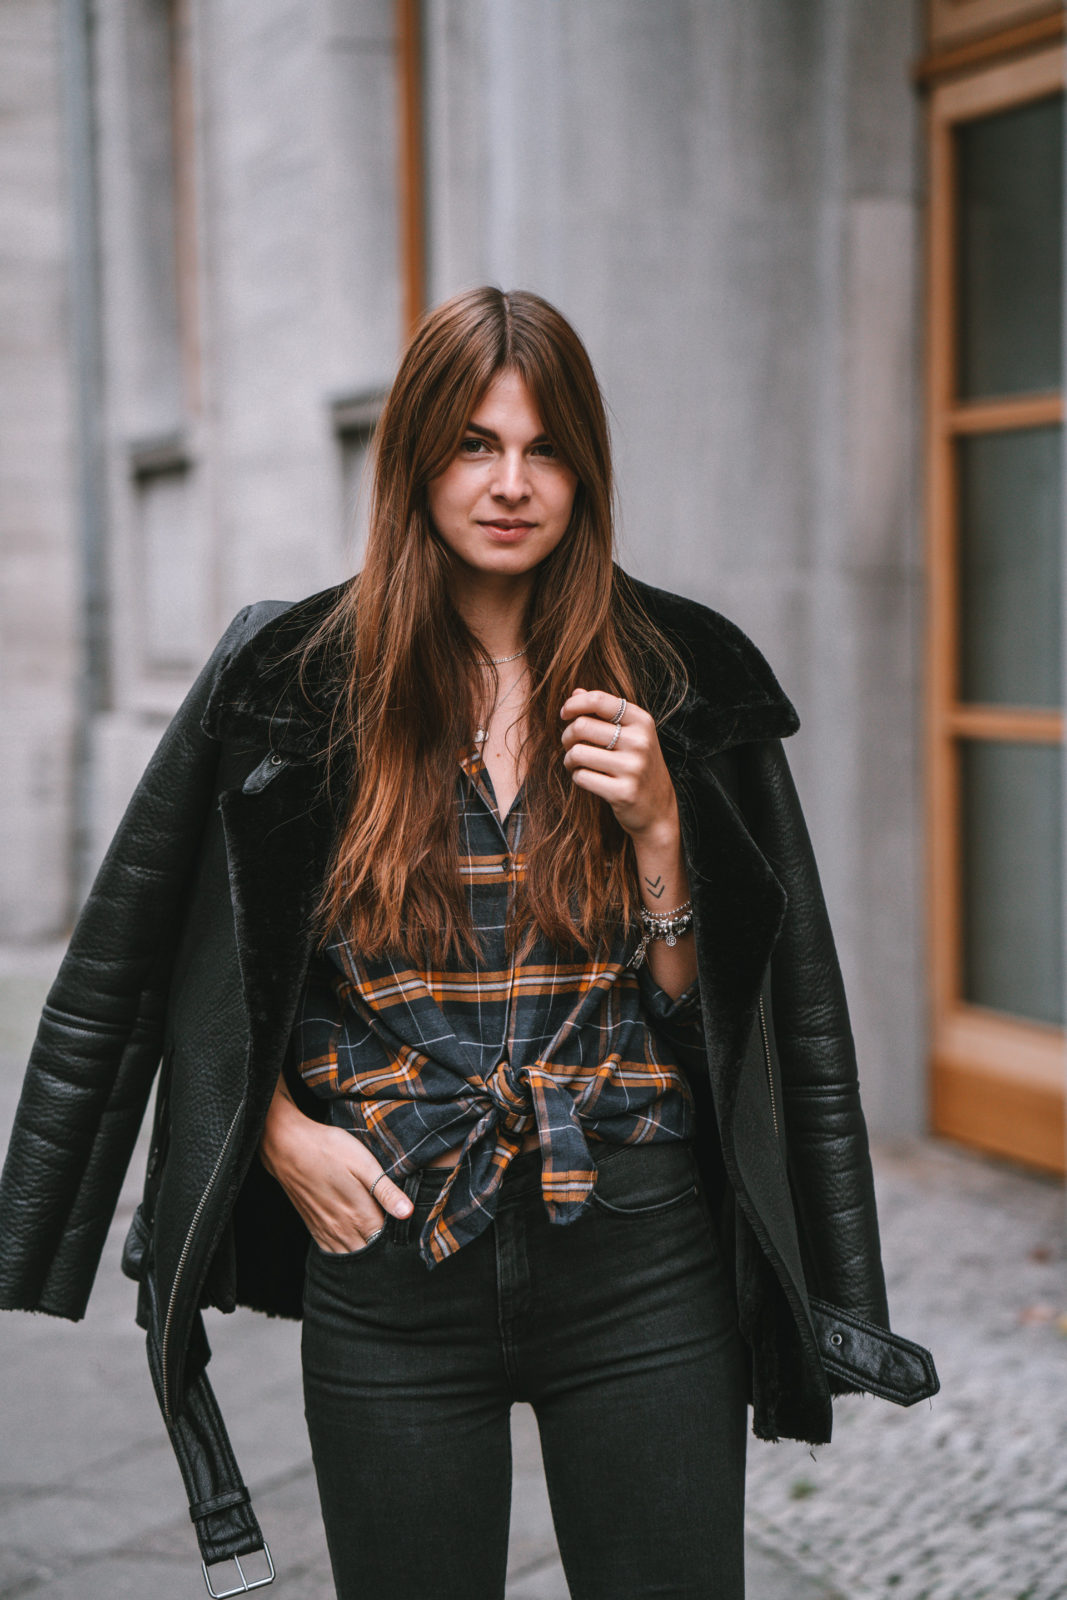 How to wear an oversized plaid shirt in winter || Fashionblog Berlin